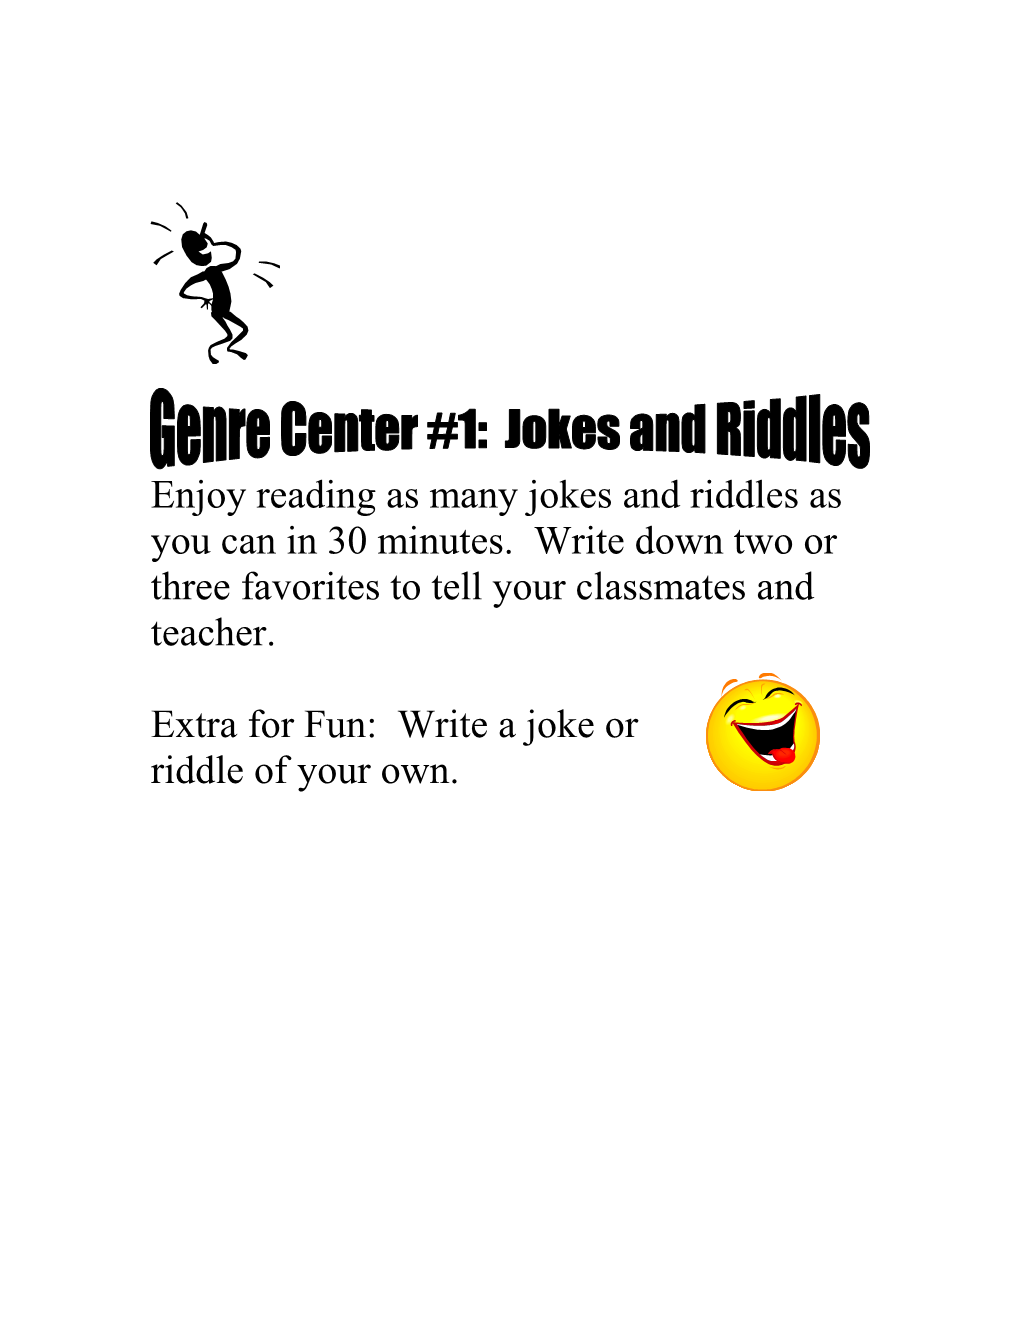 Genre Center #1: Jokes and Riddles